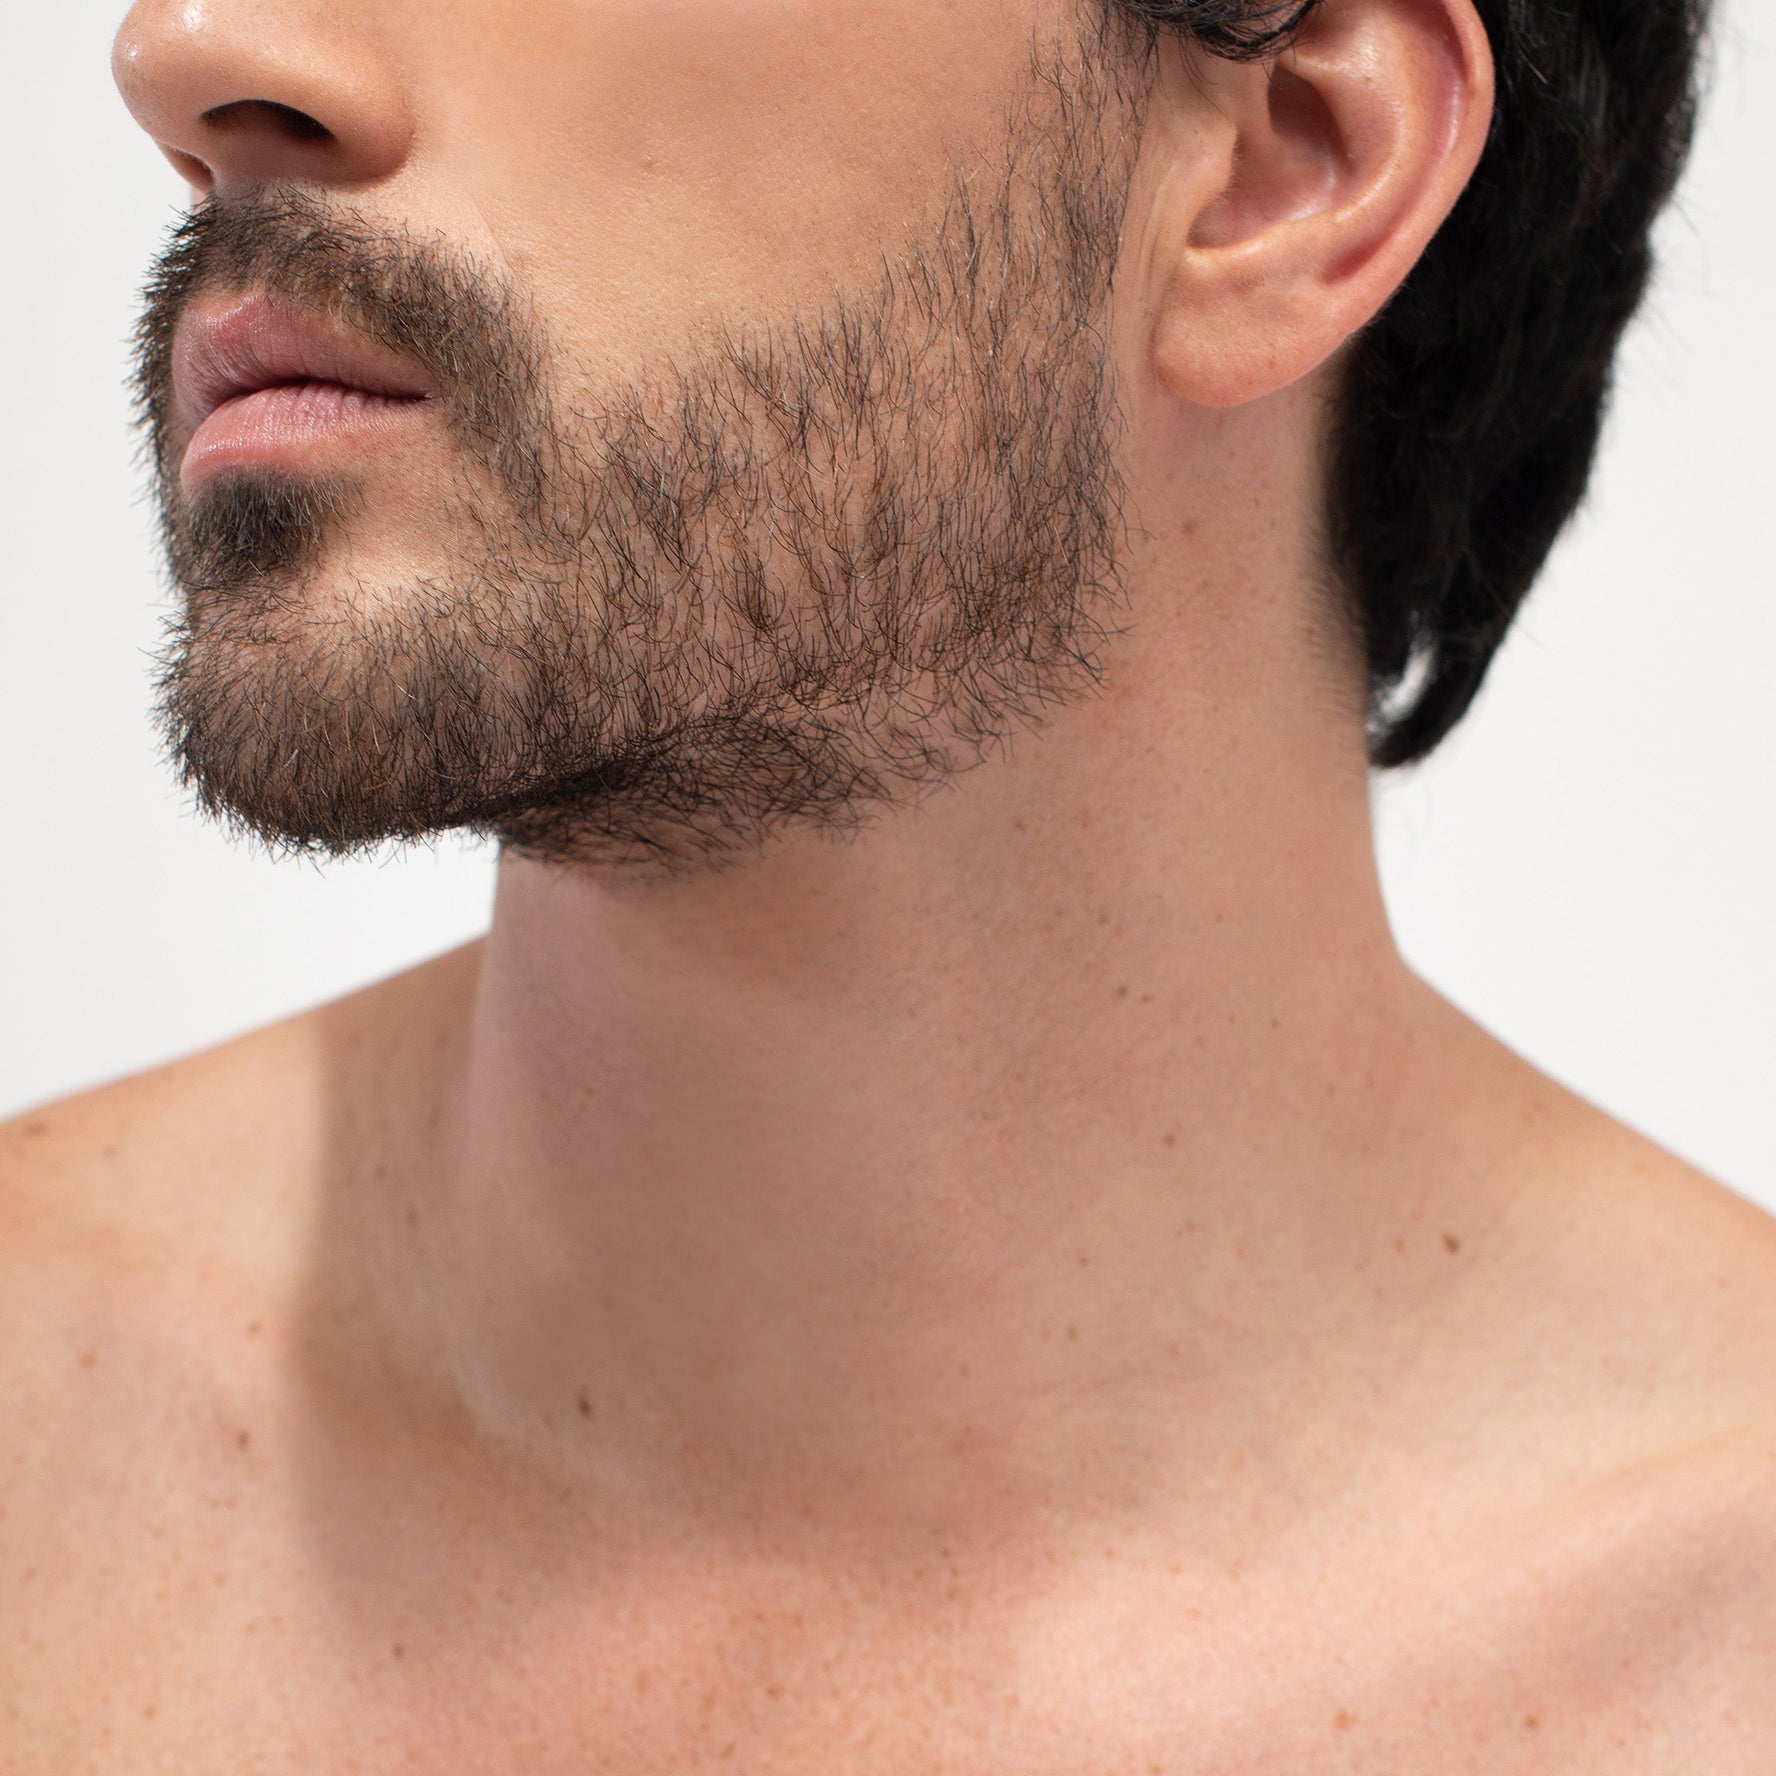 Cuello anterior masculino - Clínica Belenus